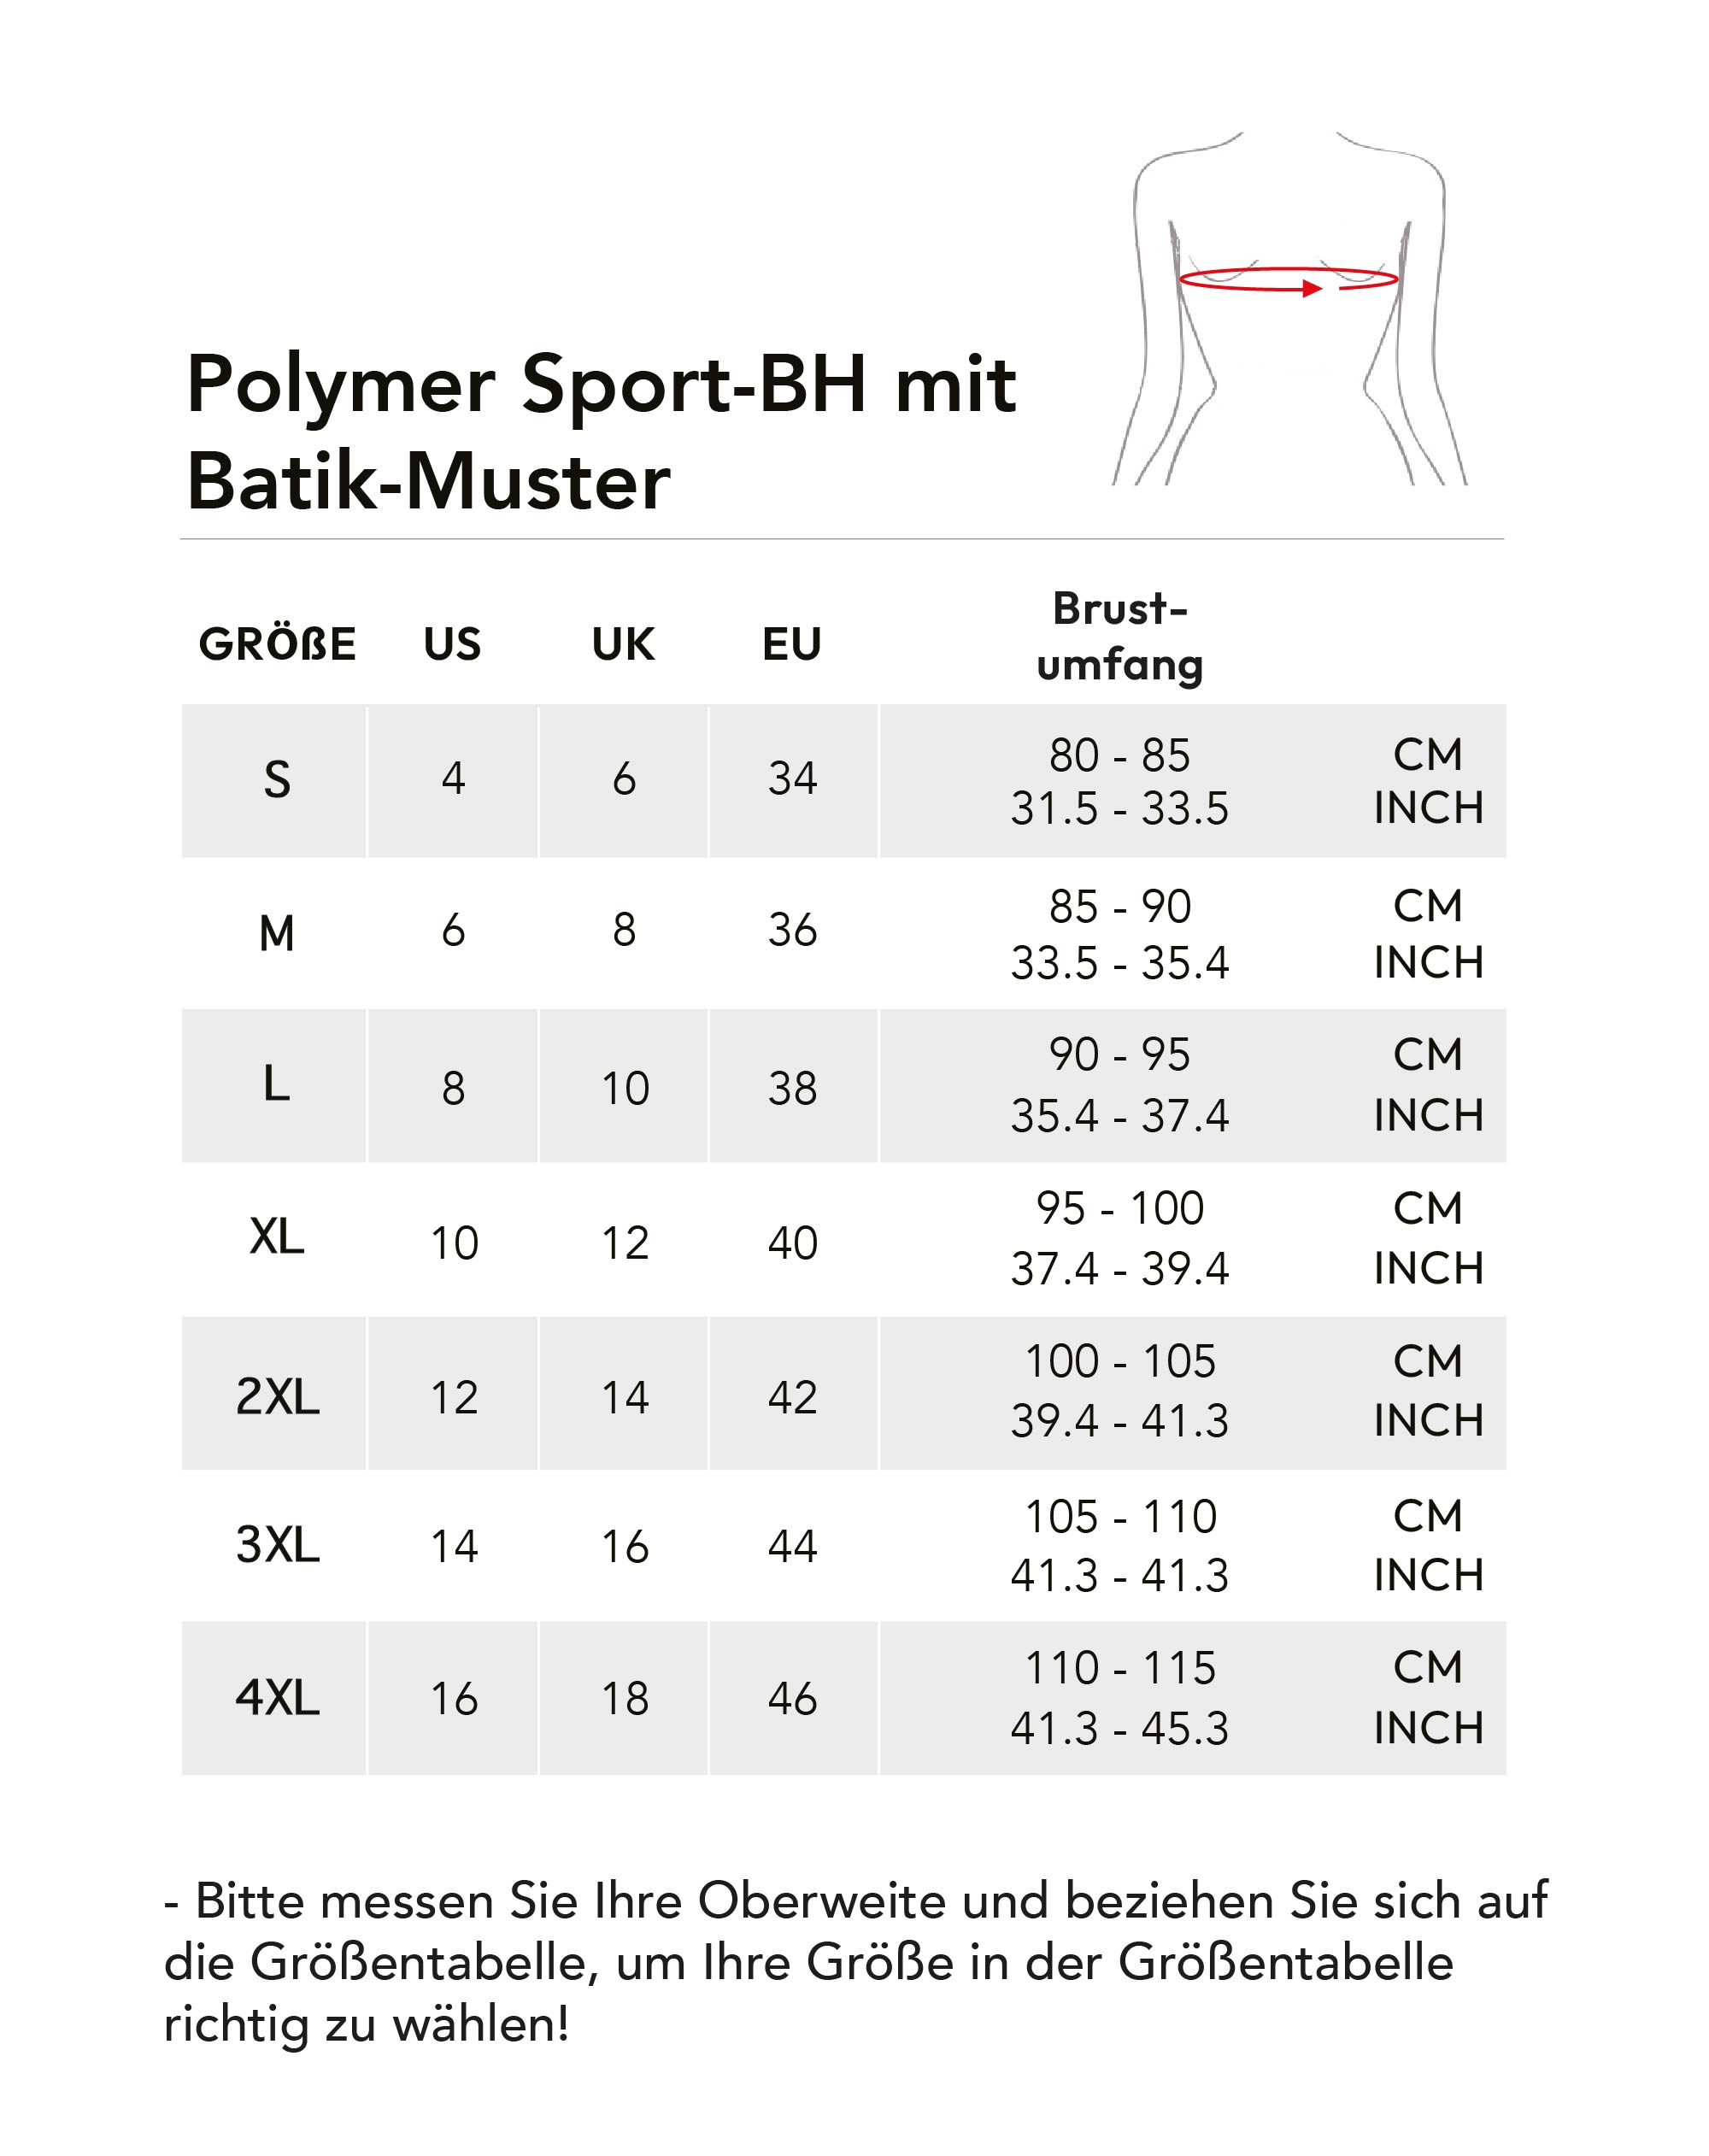 polymer-sport-bh-mit-batik-muster.jpg (240 KB)